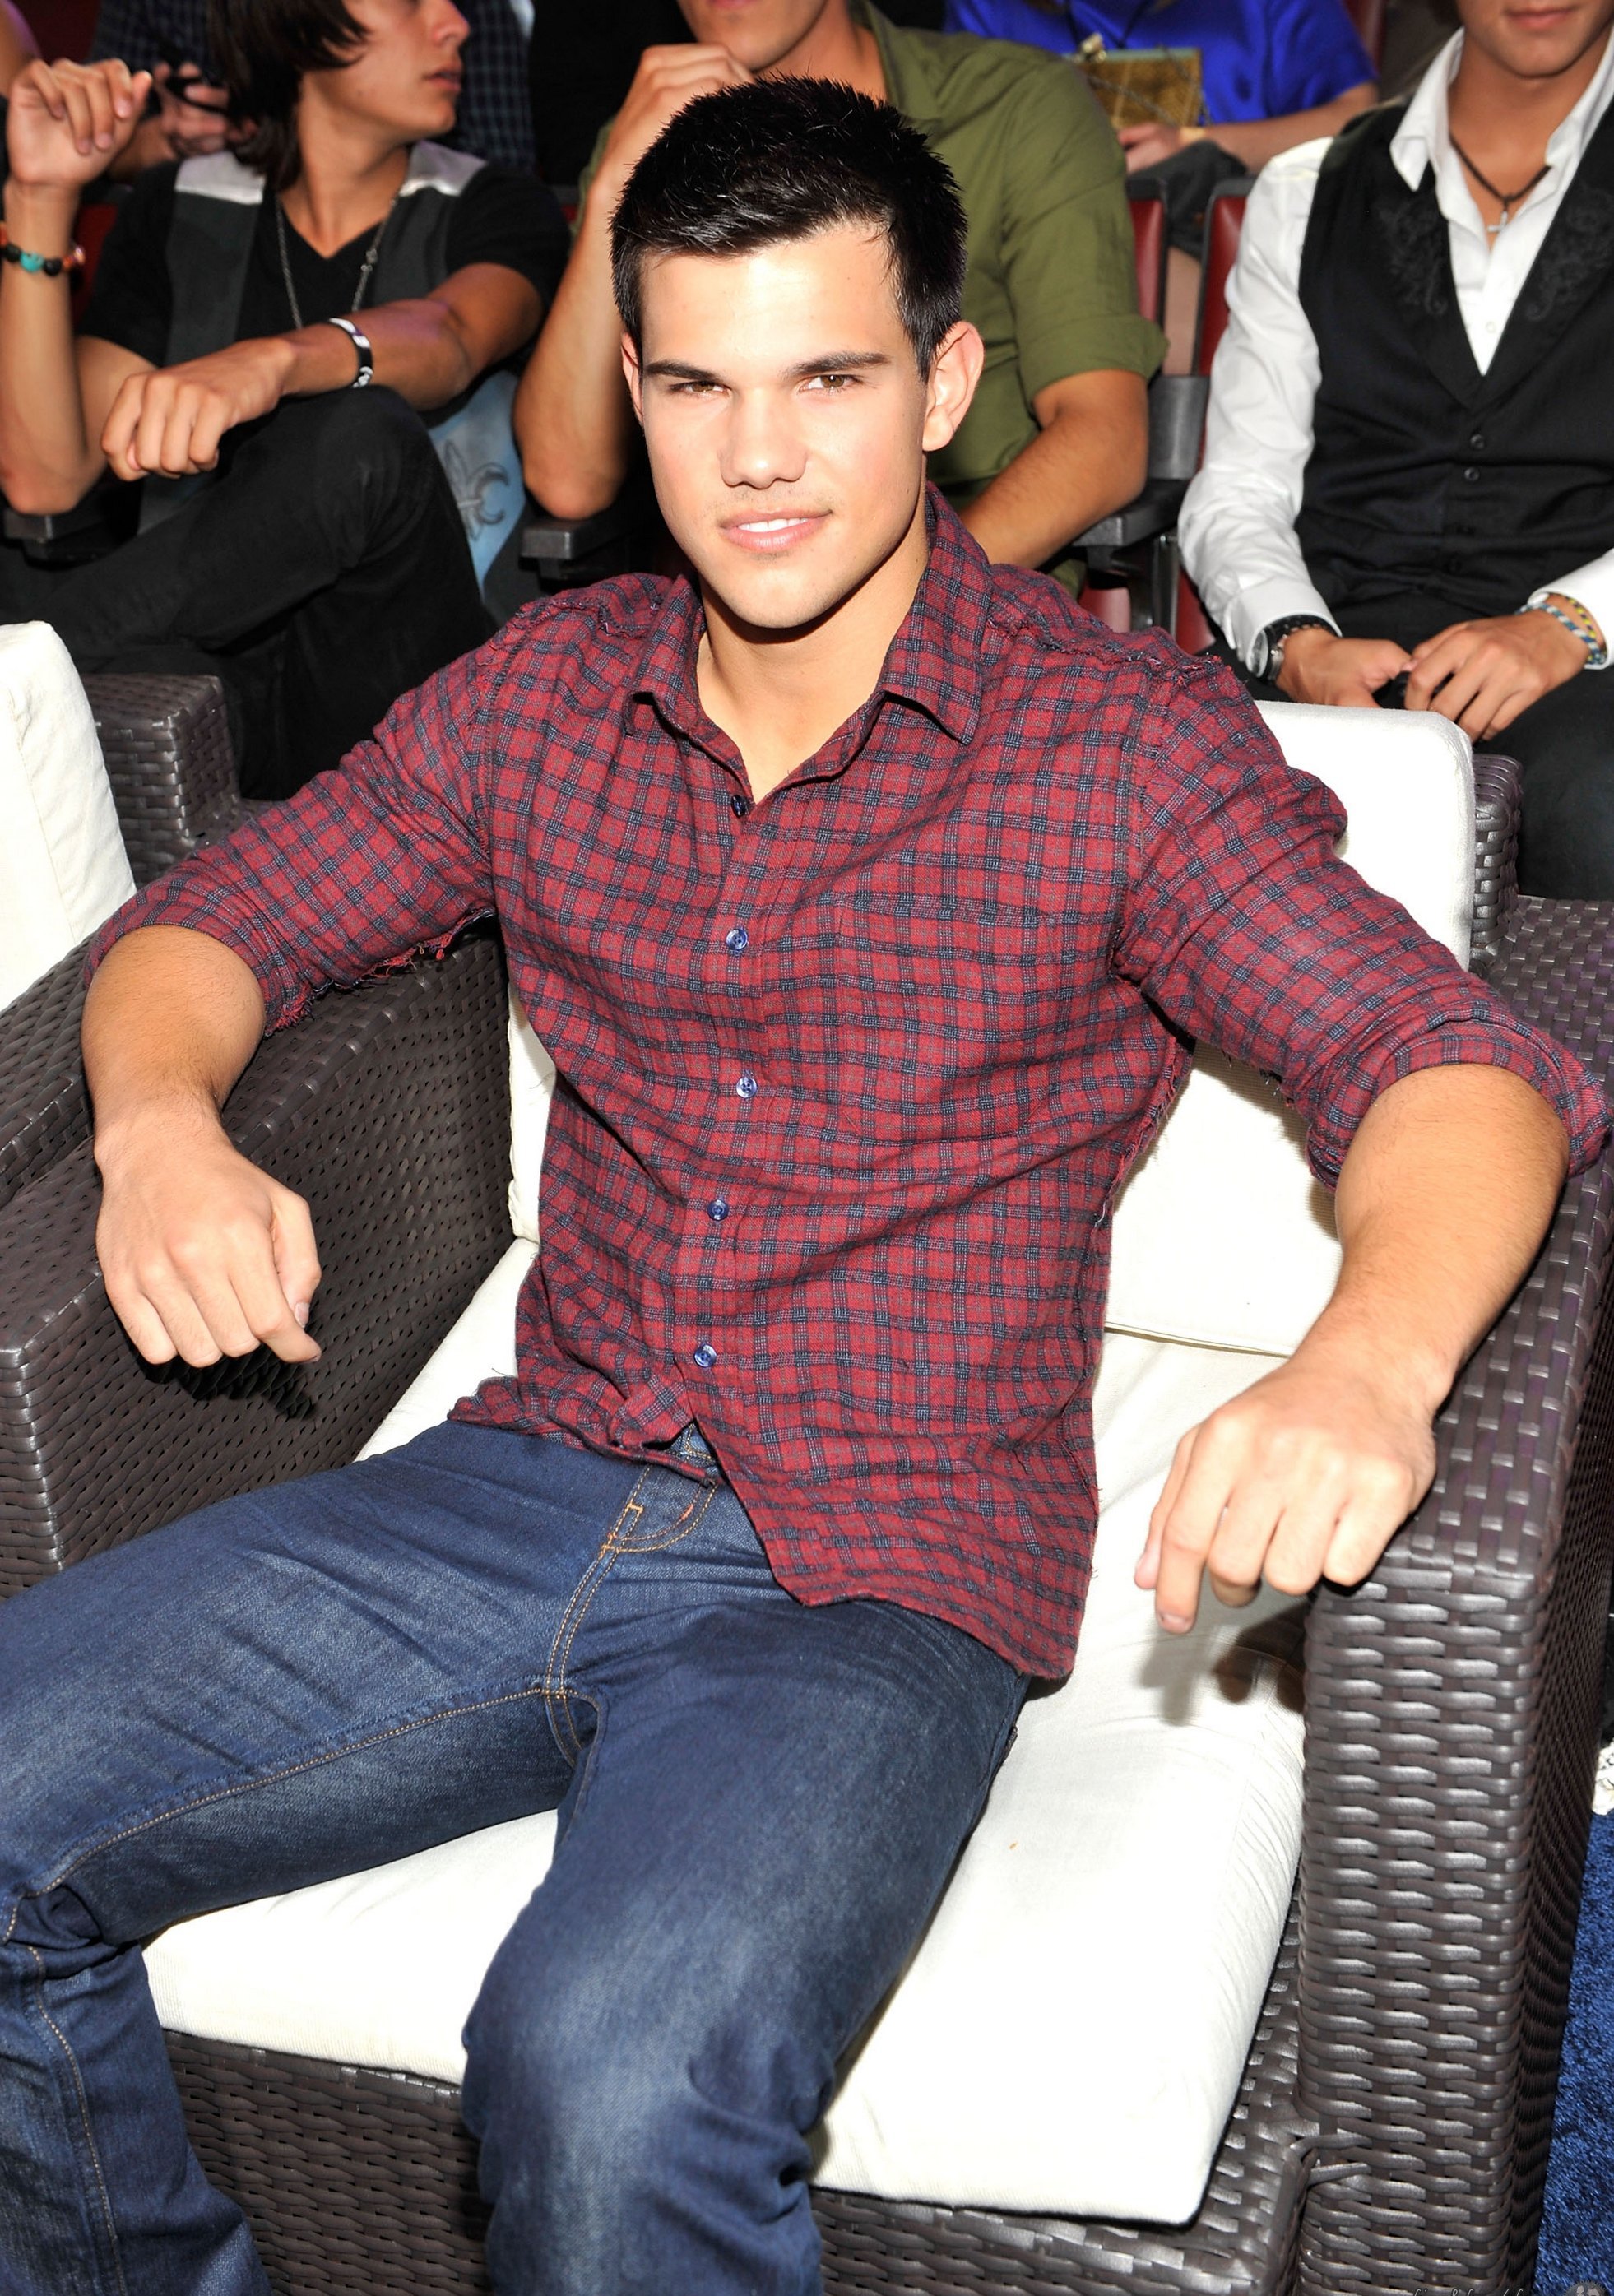 Taylor Lautner in Teen Choice Awards 2010